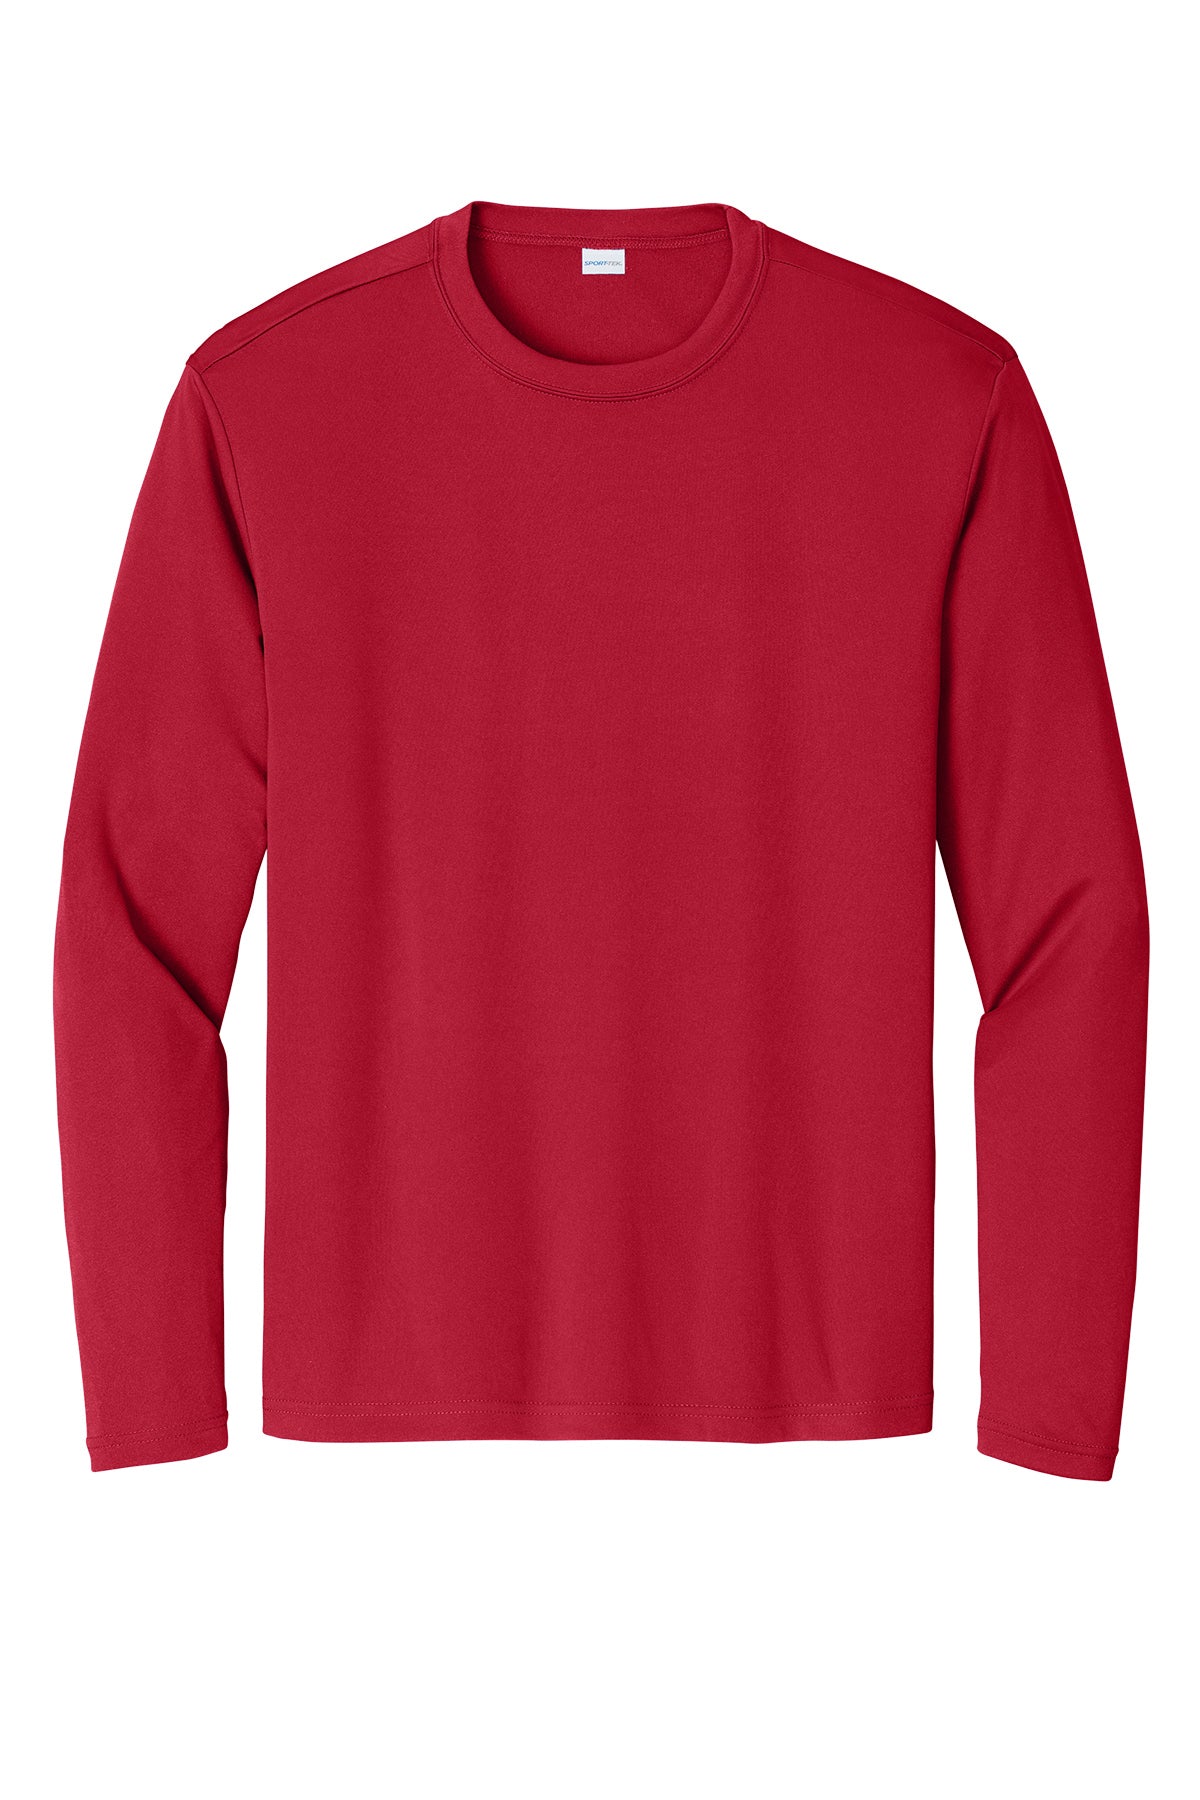 Sport-Tek St350Ls Polyester Adult Long Sleeve T-Shirt Ad Small / Deep Red